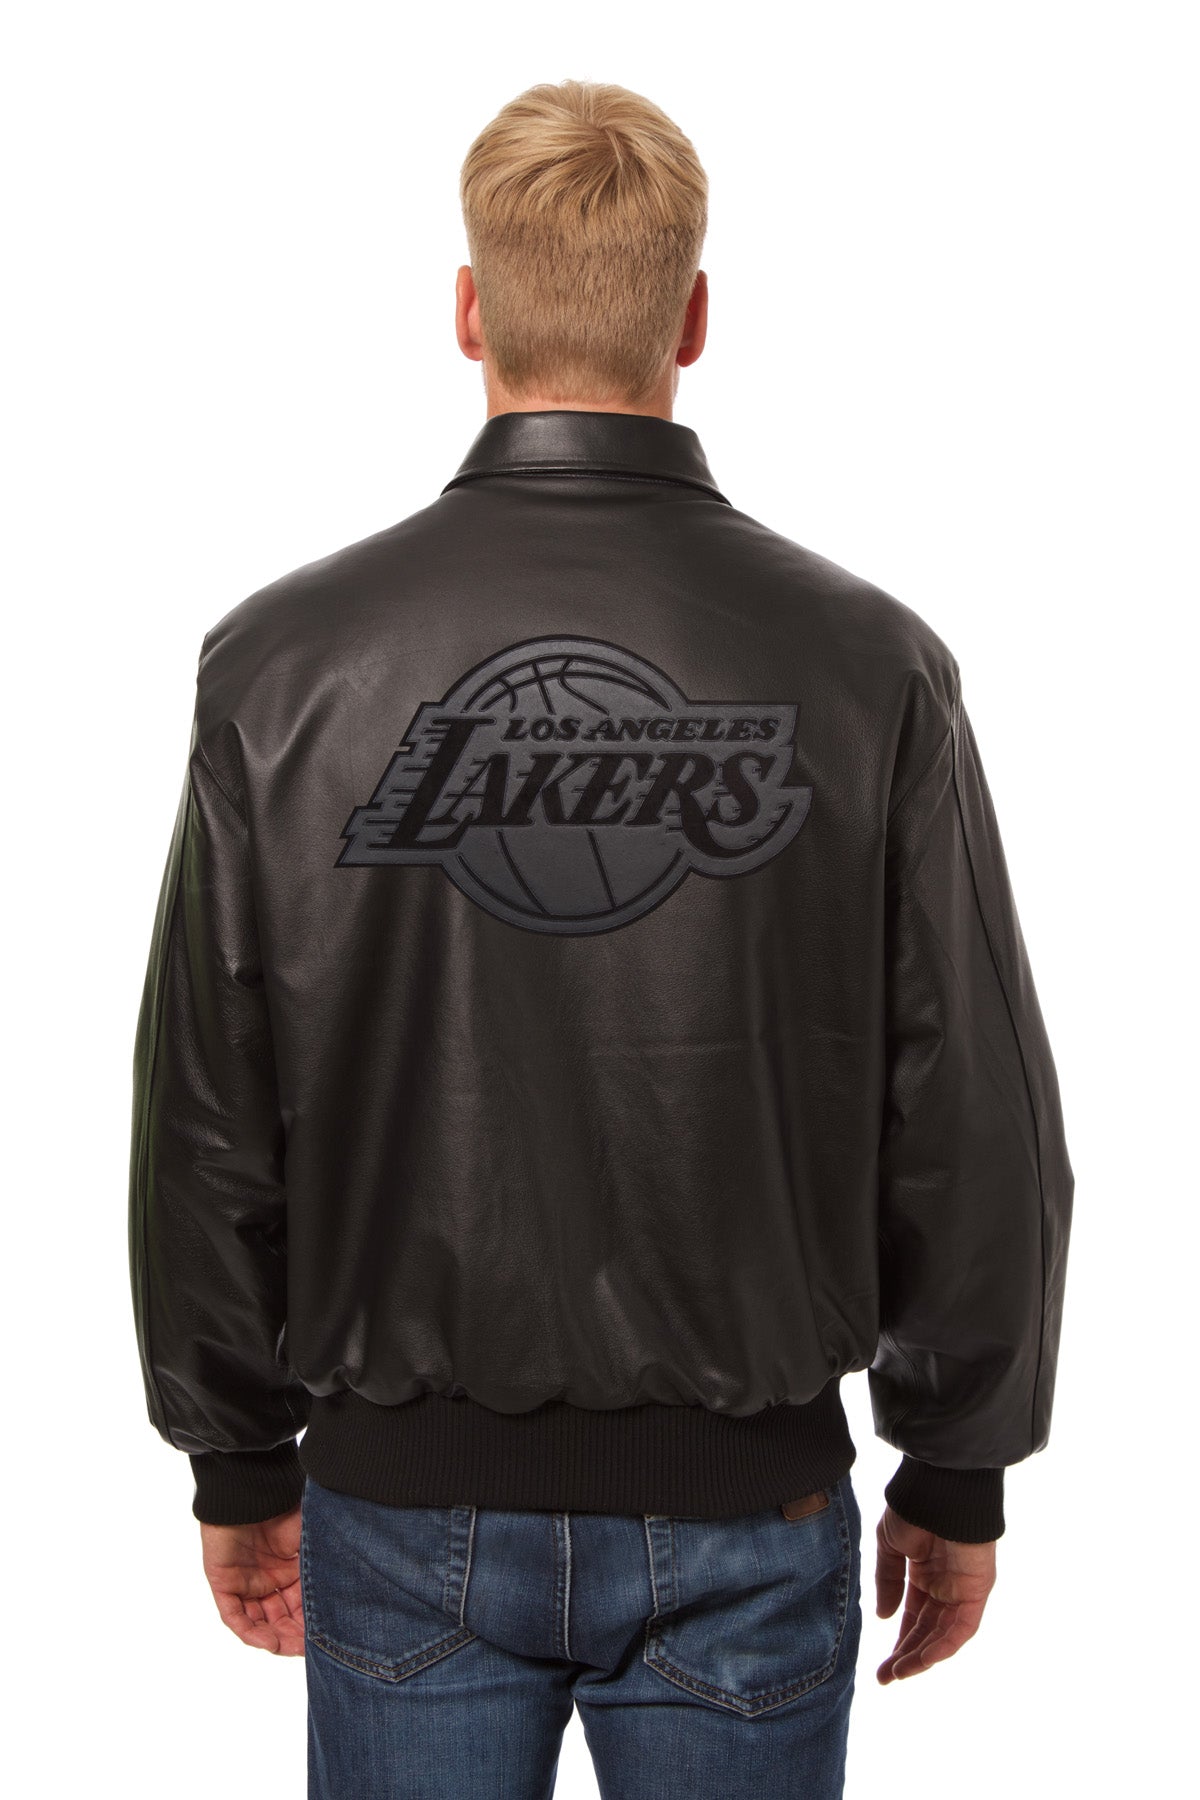 Los Angeles Lakers Full Leather Jacket - Black